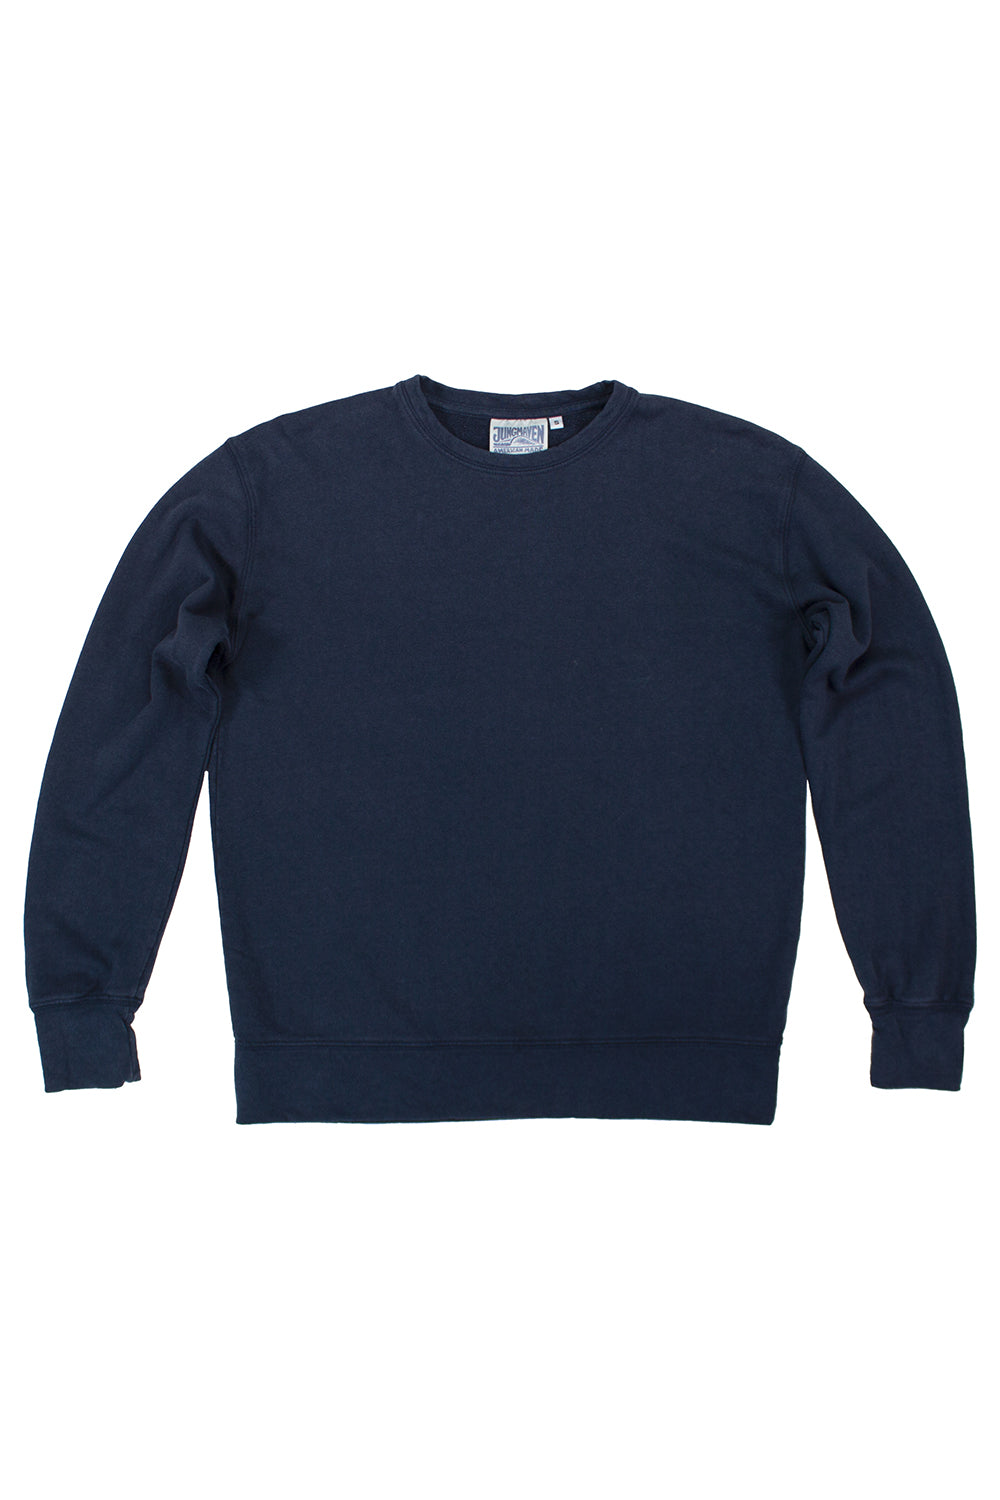 Tahoe Hemp Clothing Sweatshirt | Jungmaven